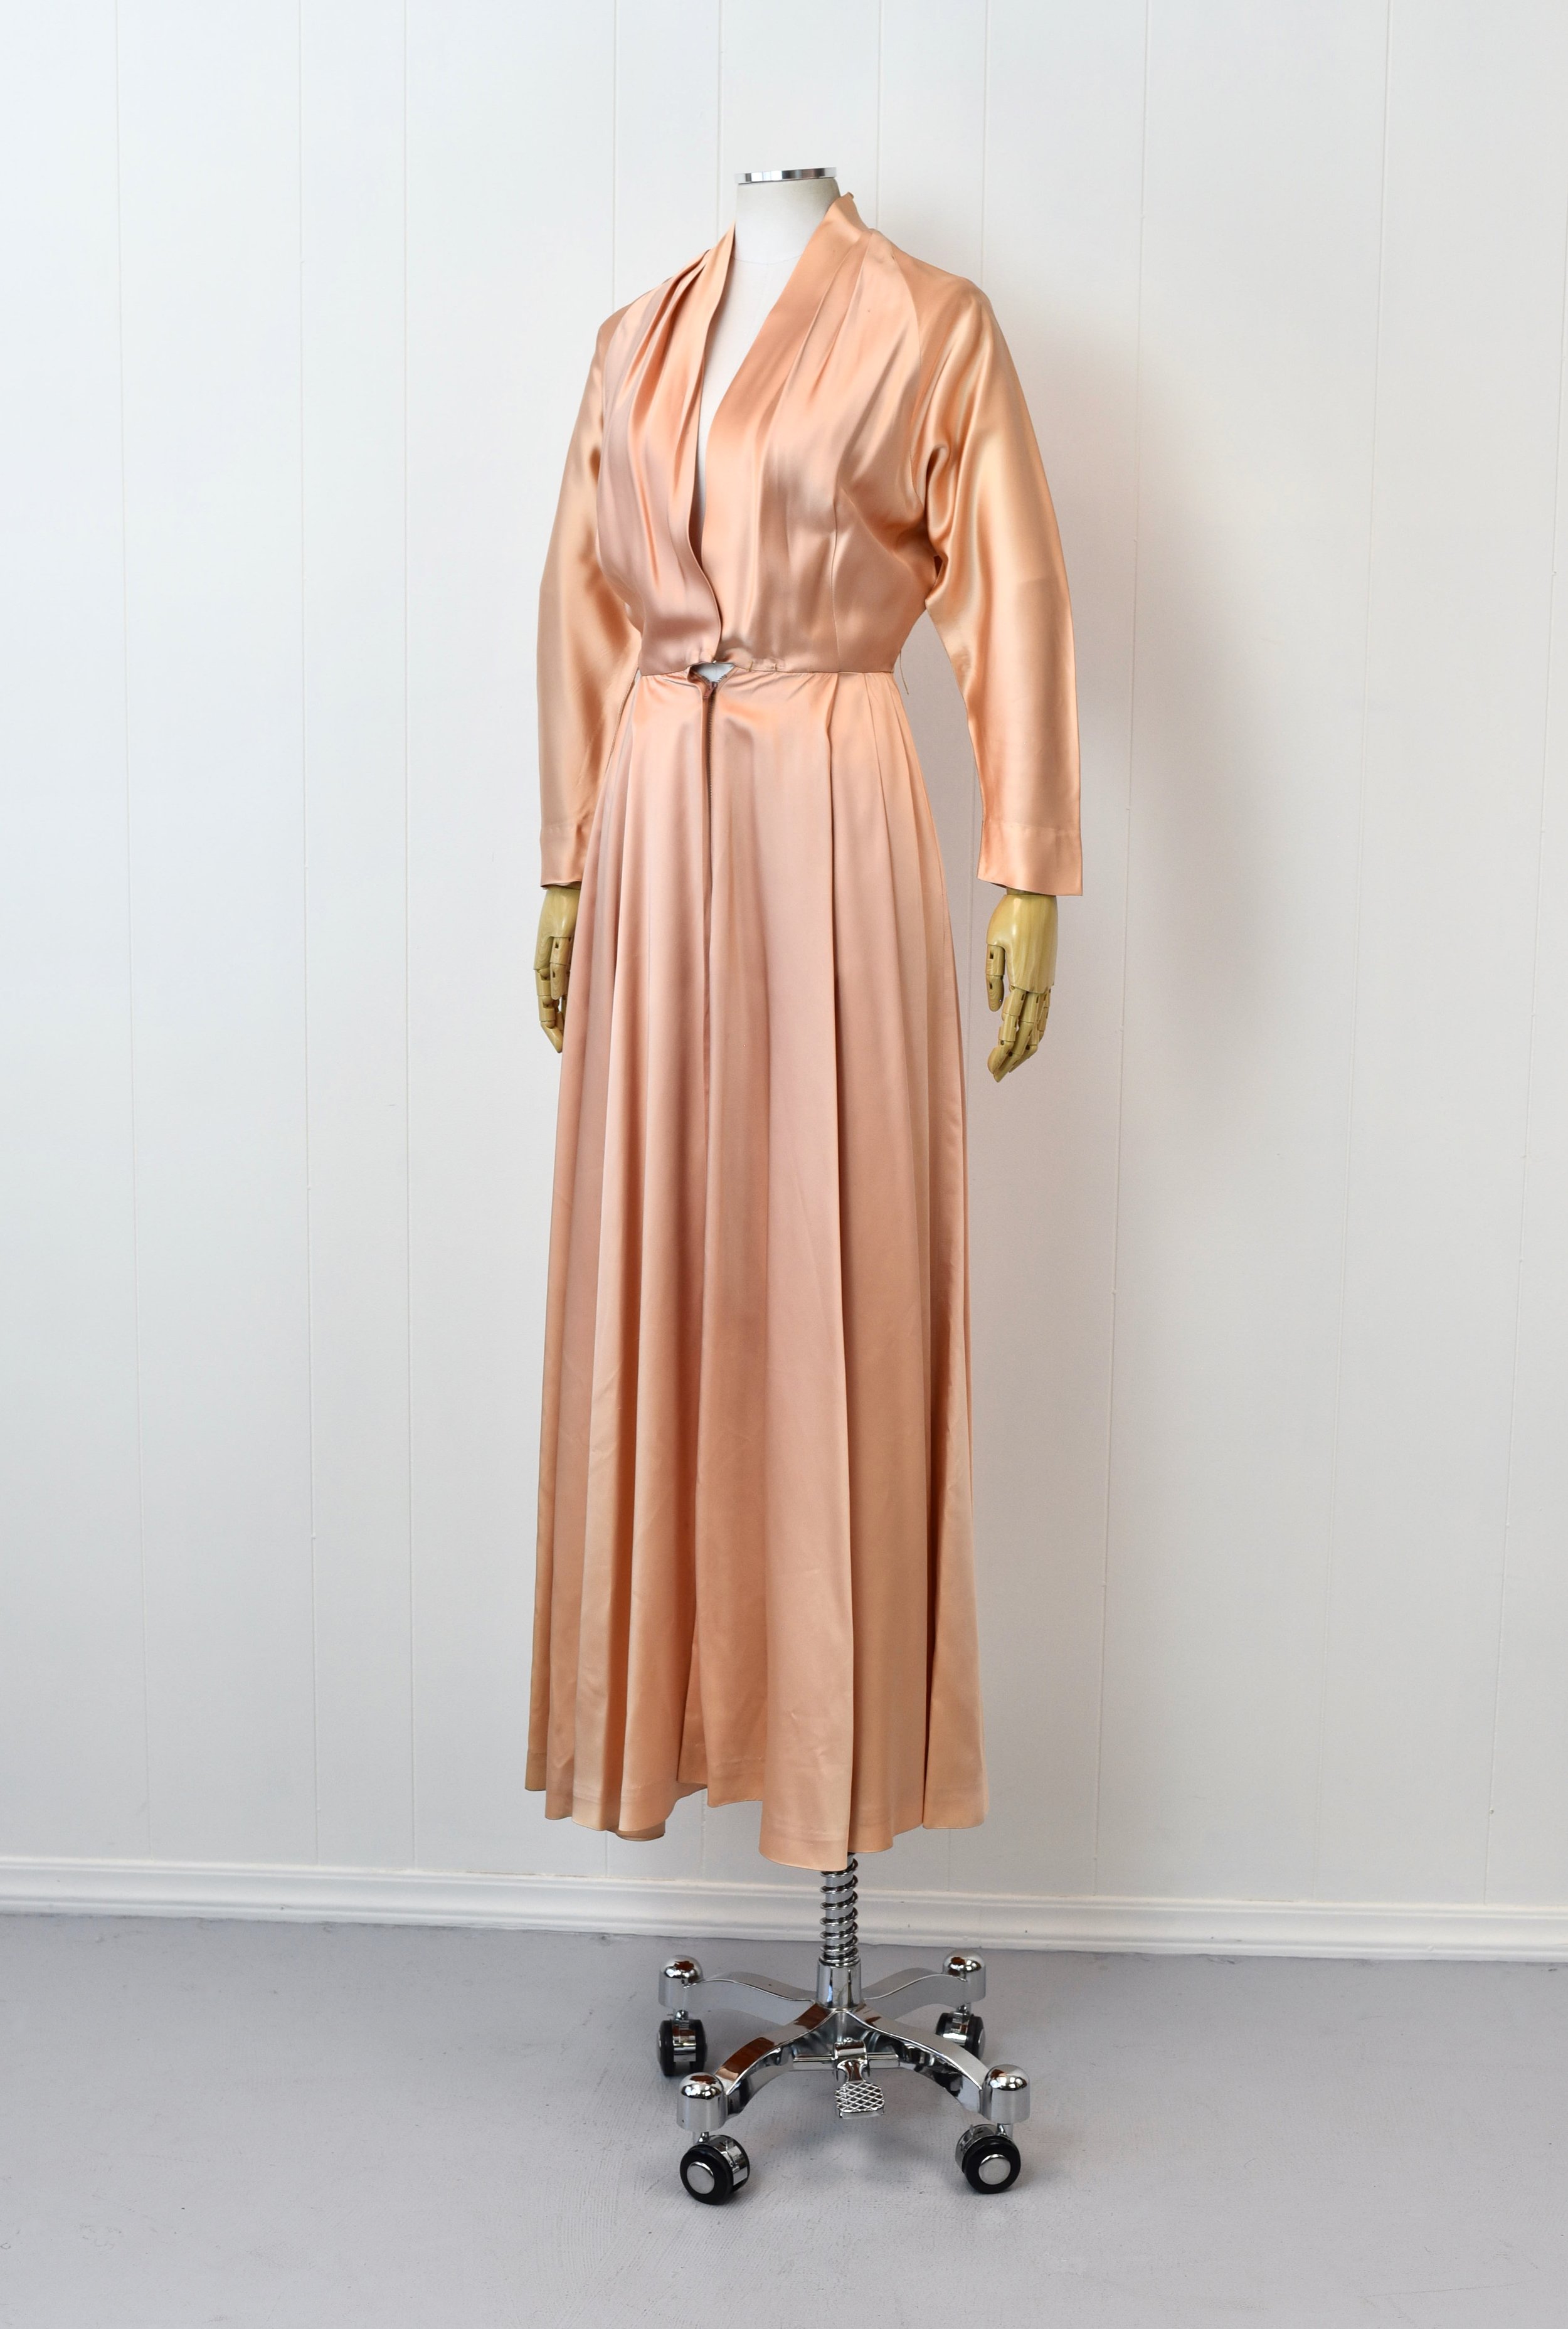 1940s Vintage Sleepwear  Robes for Women for sale  eBay